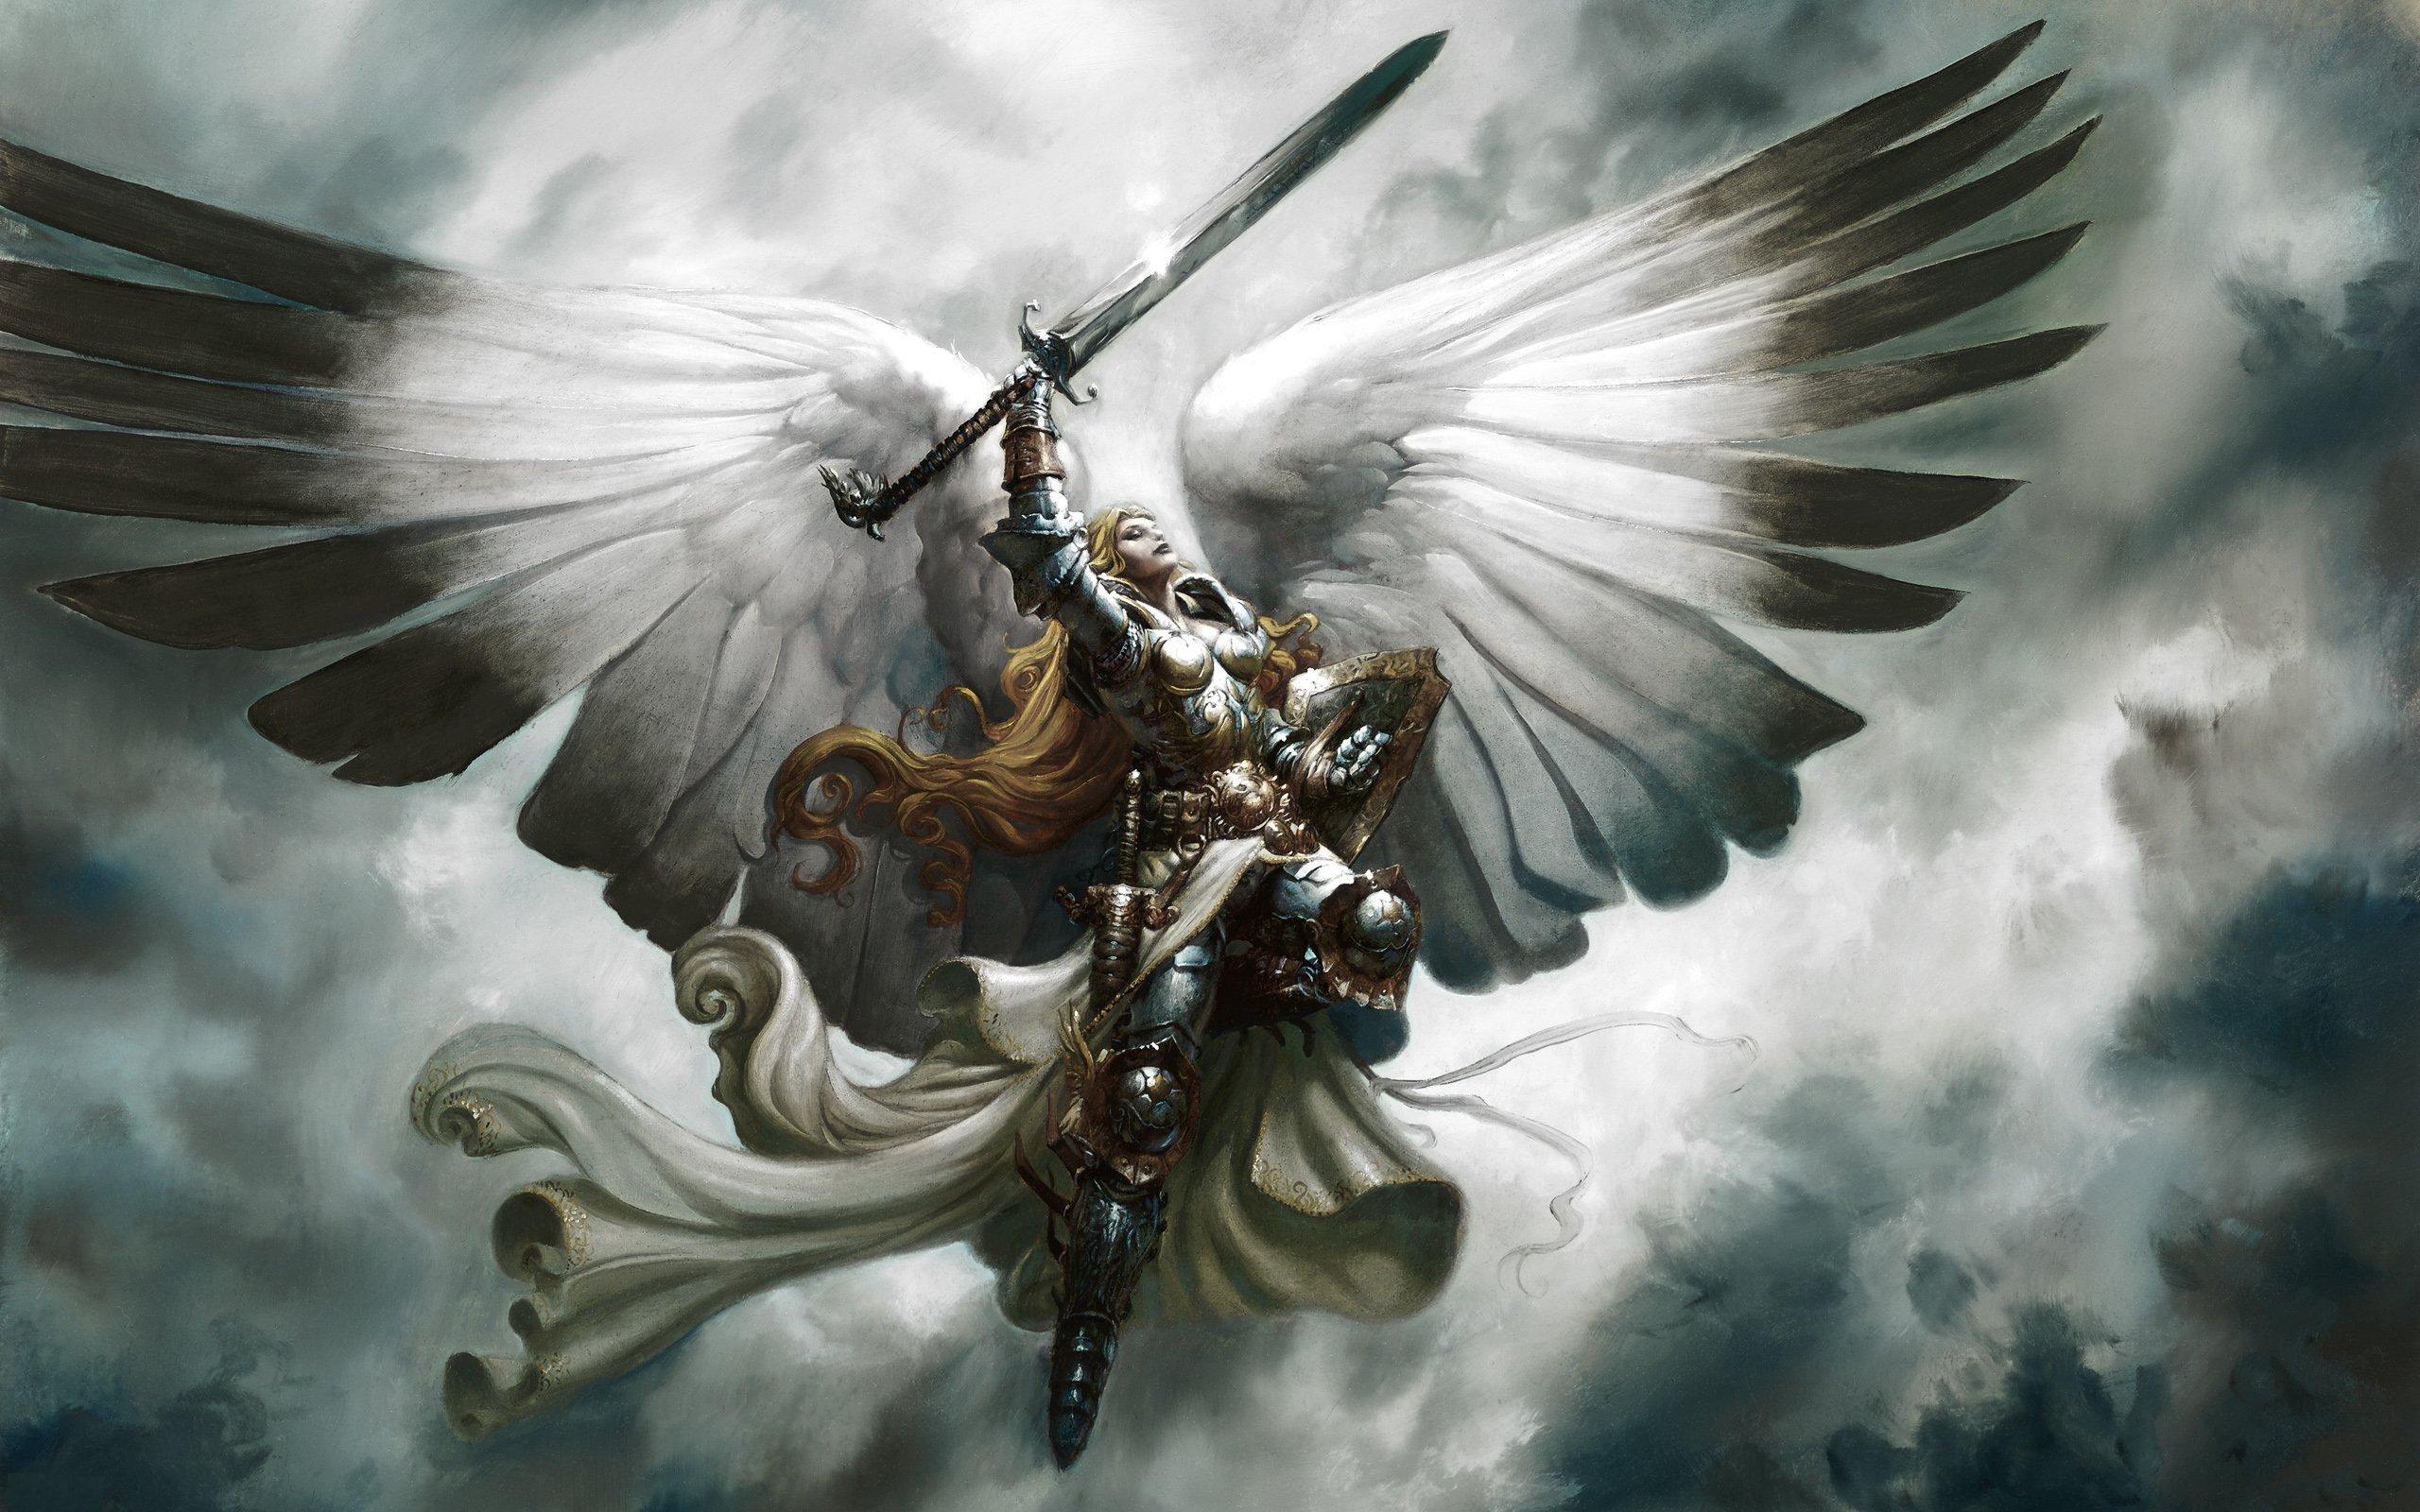 St Michael The Archangel Wallpaper ·① WallpaperTag